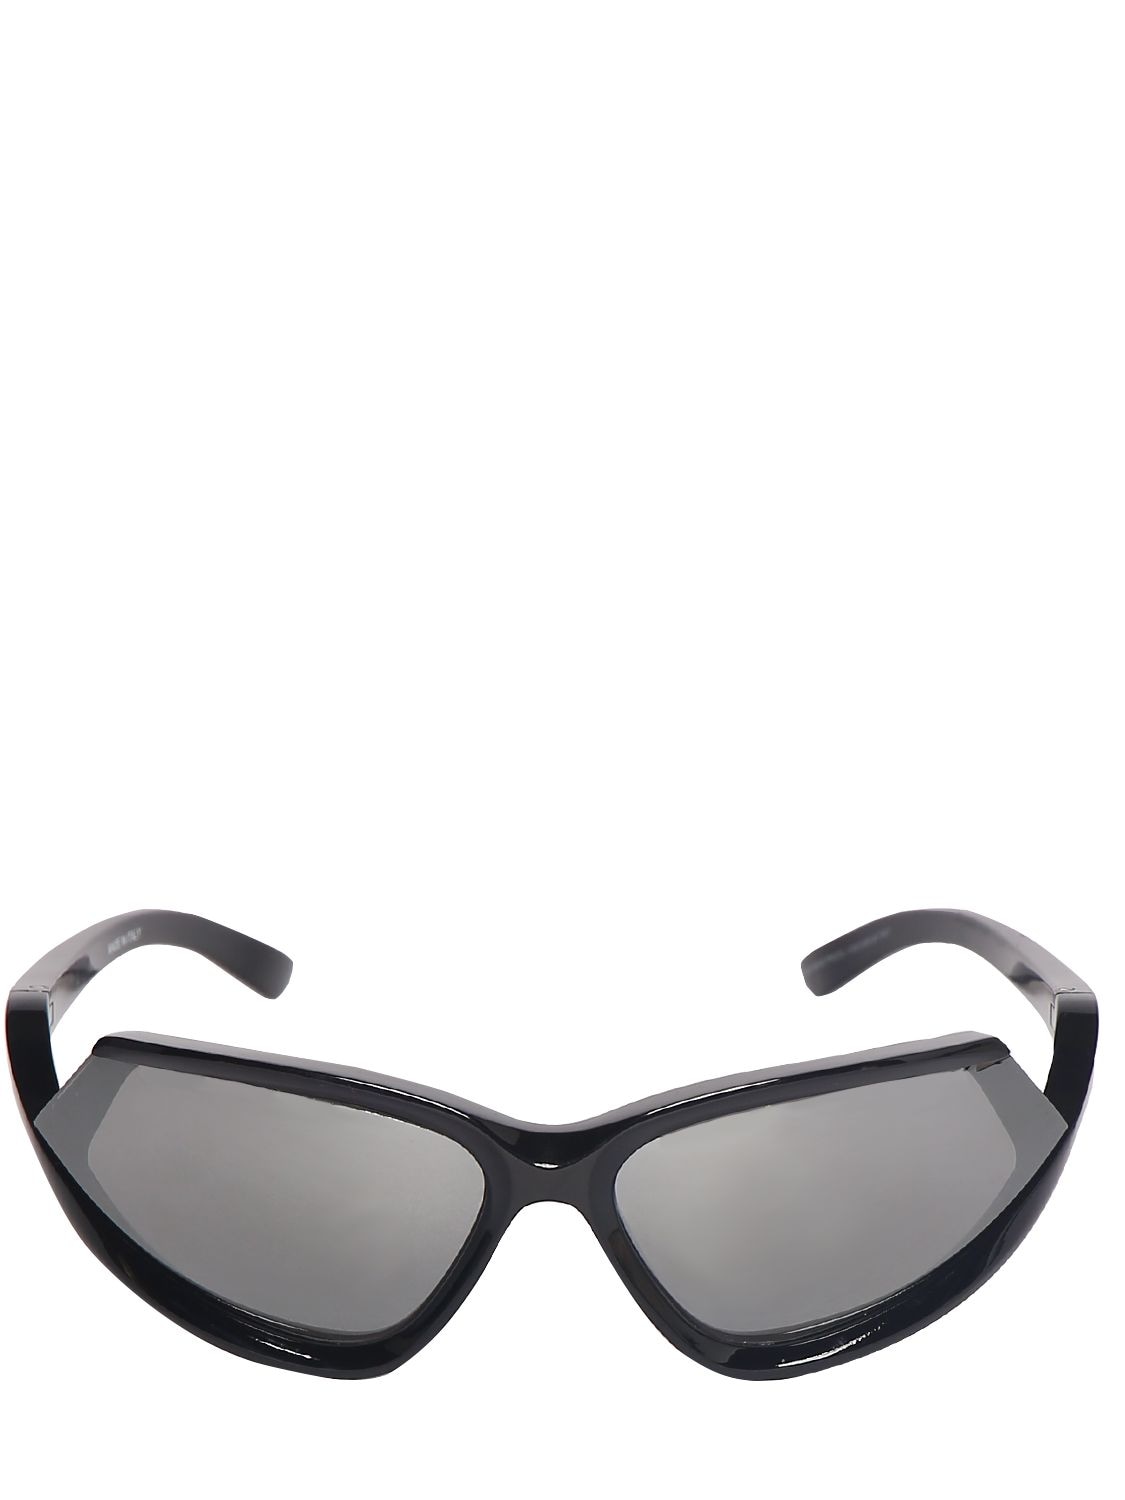 Image of 0289s Side Xpander Cat Sunglasses